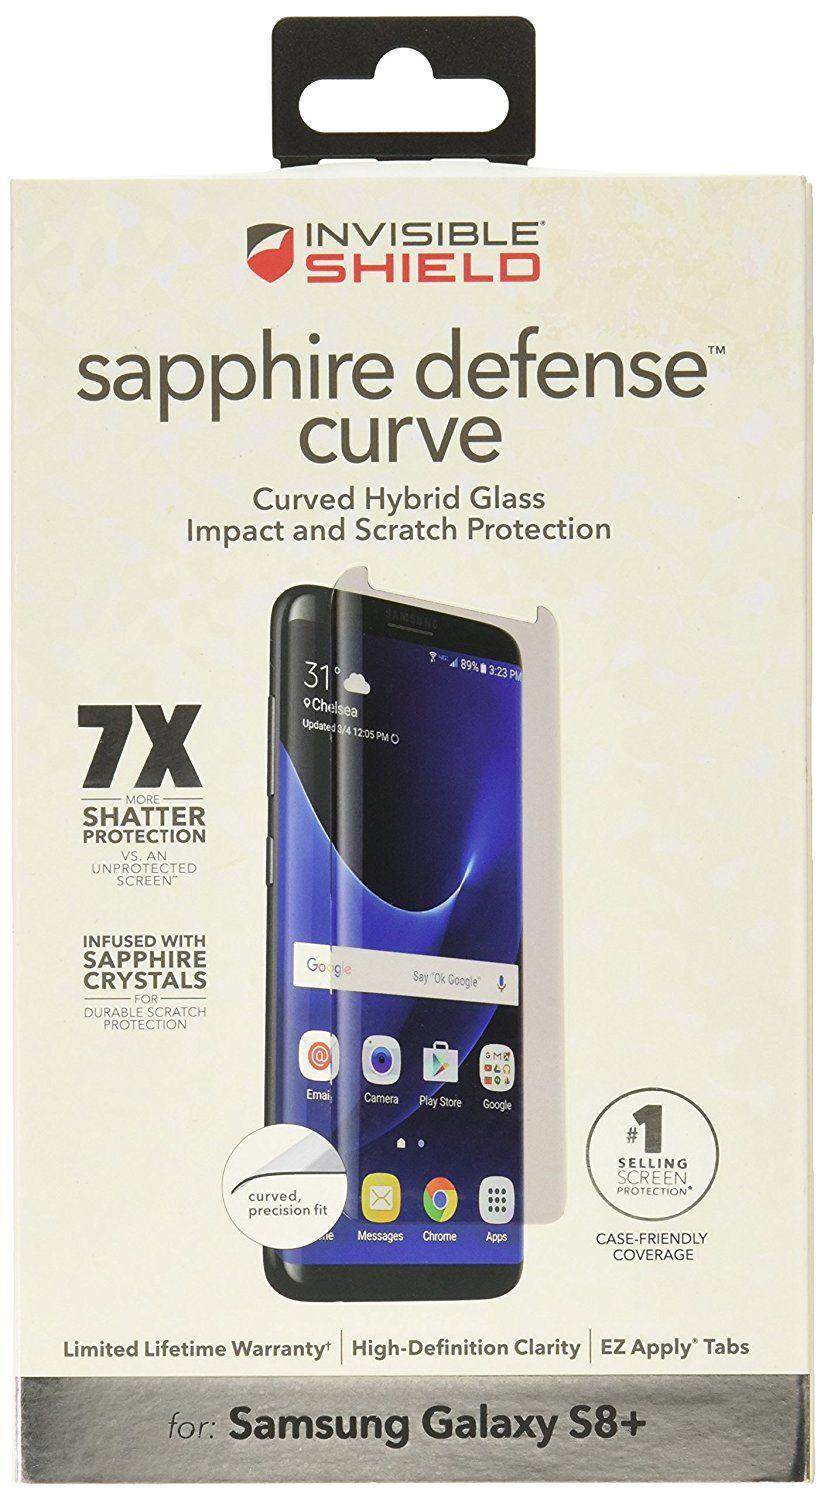 invisibleSHIELD Logo - ZAGG InvisibleShield Sapphire Defense Hybrid Glass Screen Protector ...